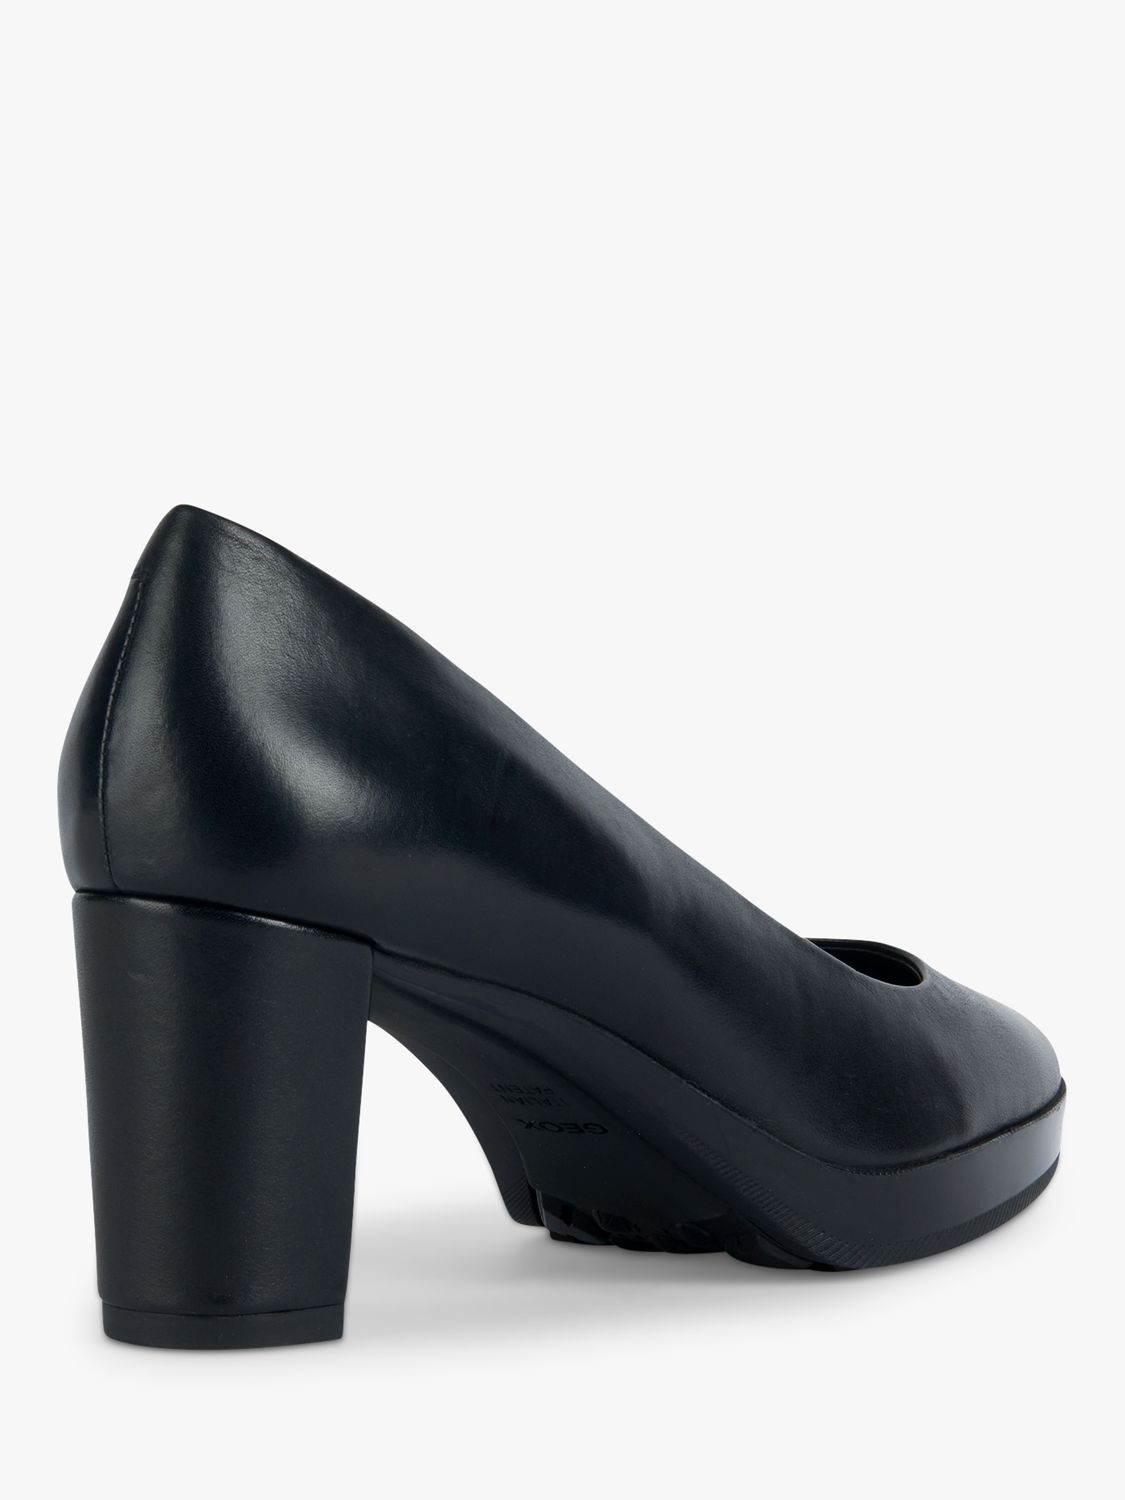 Geox Walk Pleasure Mid Heel Leather Court Shoes, Black, EU36